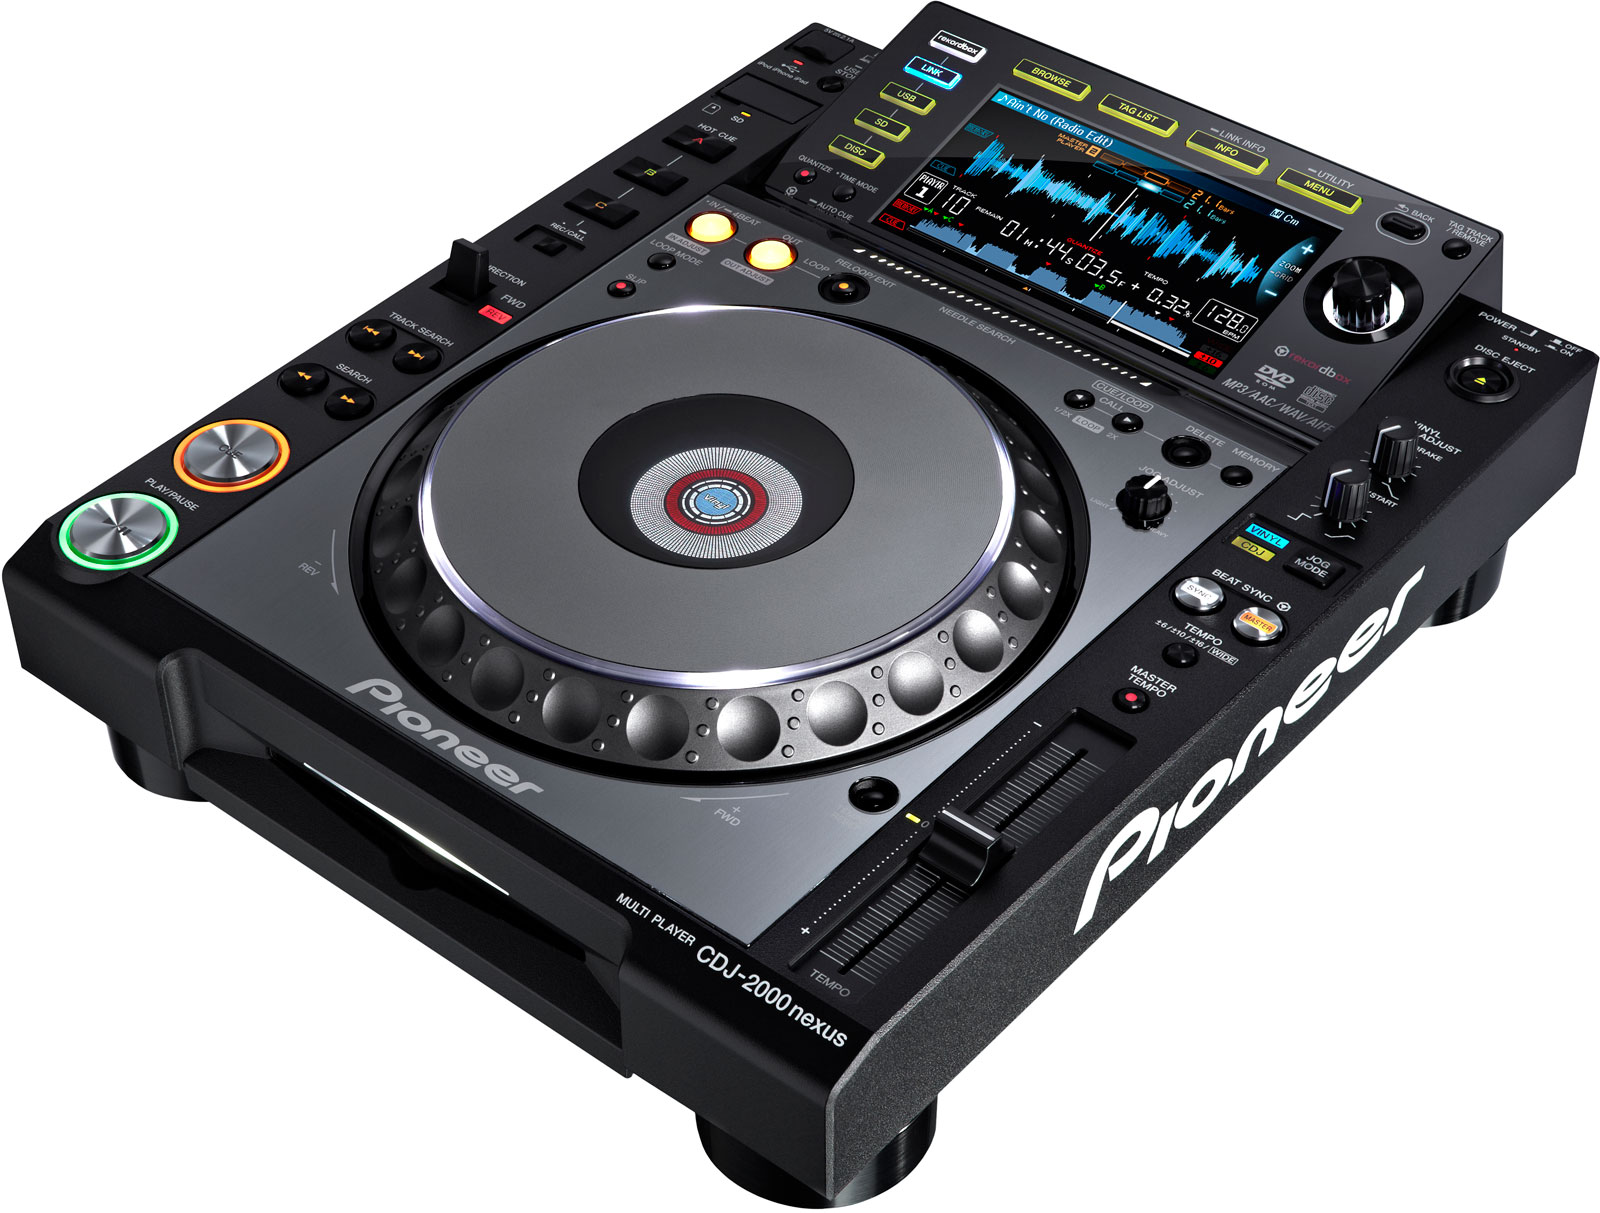 DJ Equipment Hire